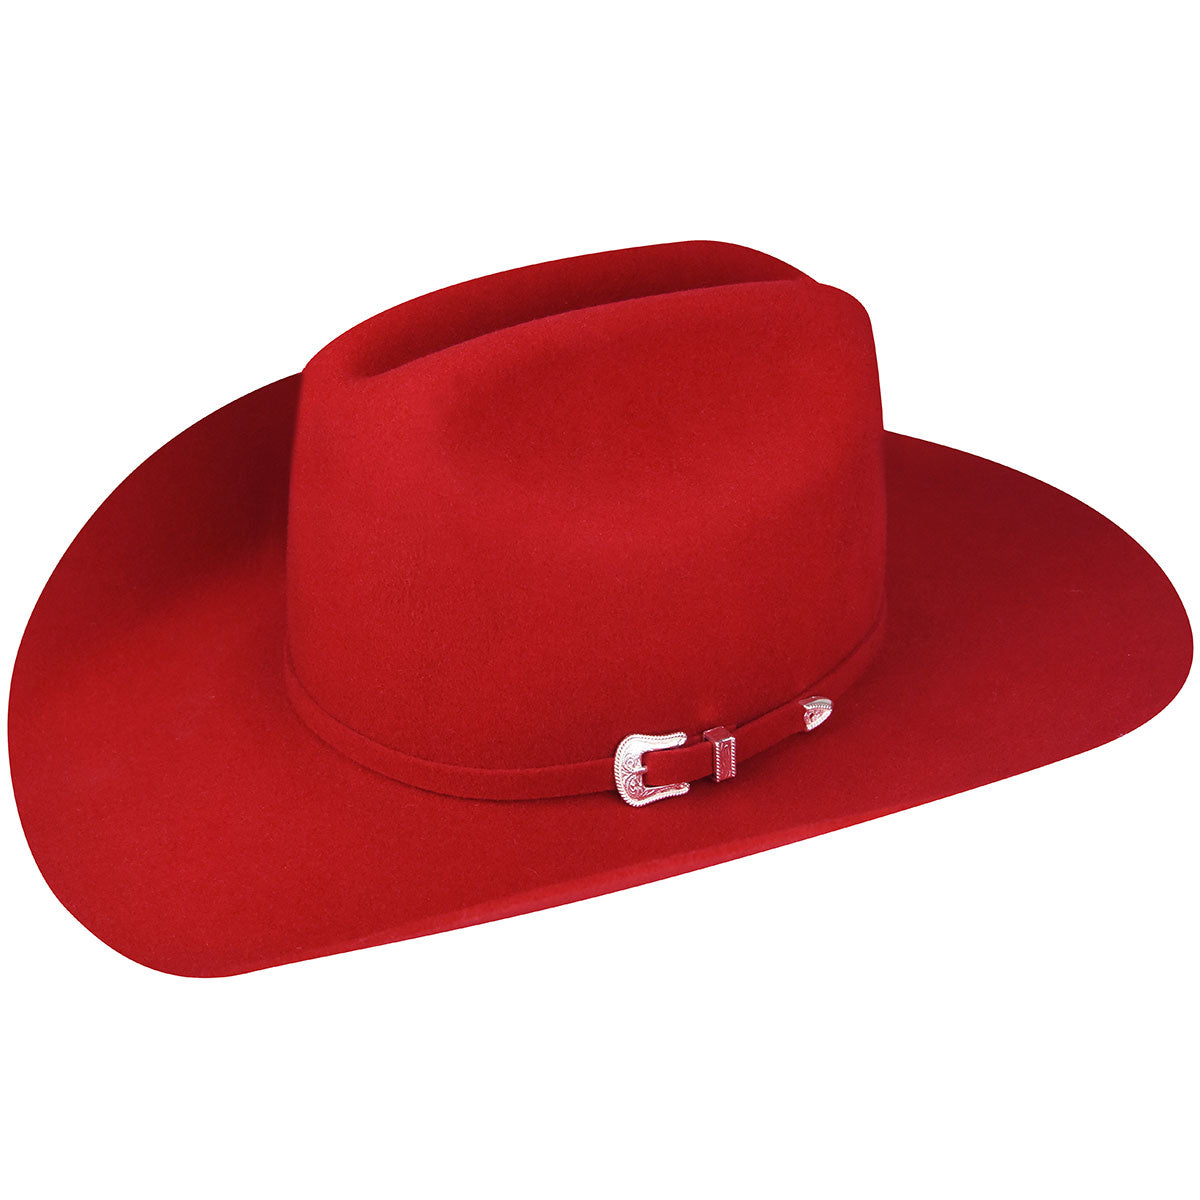 BAILEY LIGHTNING 4X HAT - RED